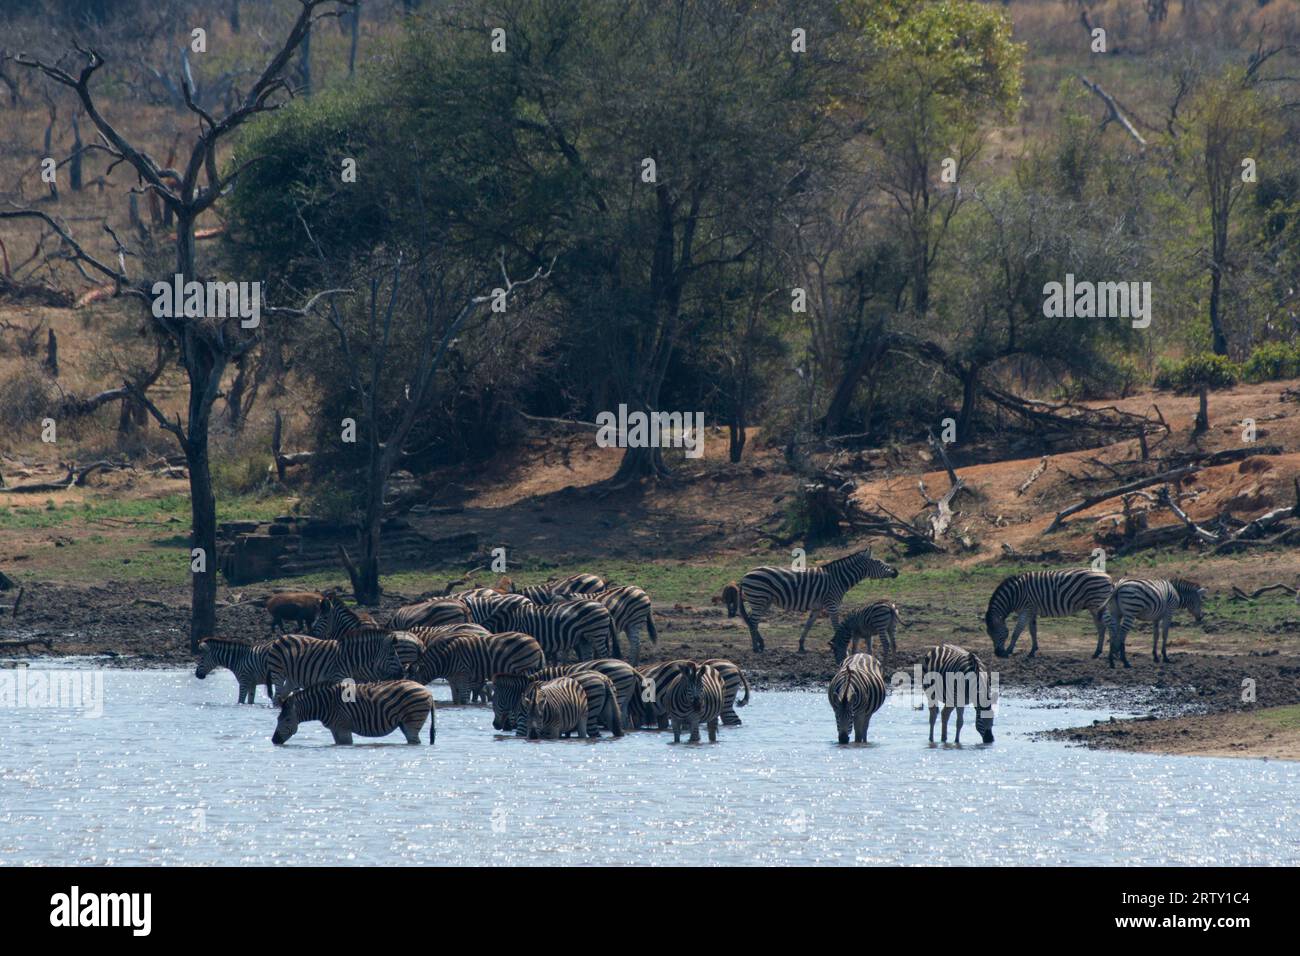 Herd of zebras drinking in a lagoon. manada de cebras bebiendo en una laguna Stock Photo